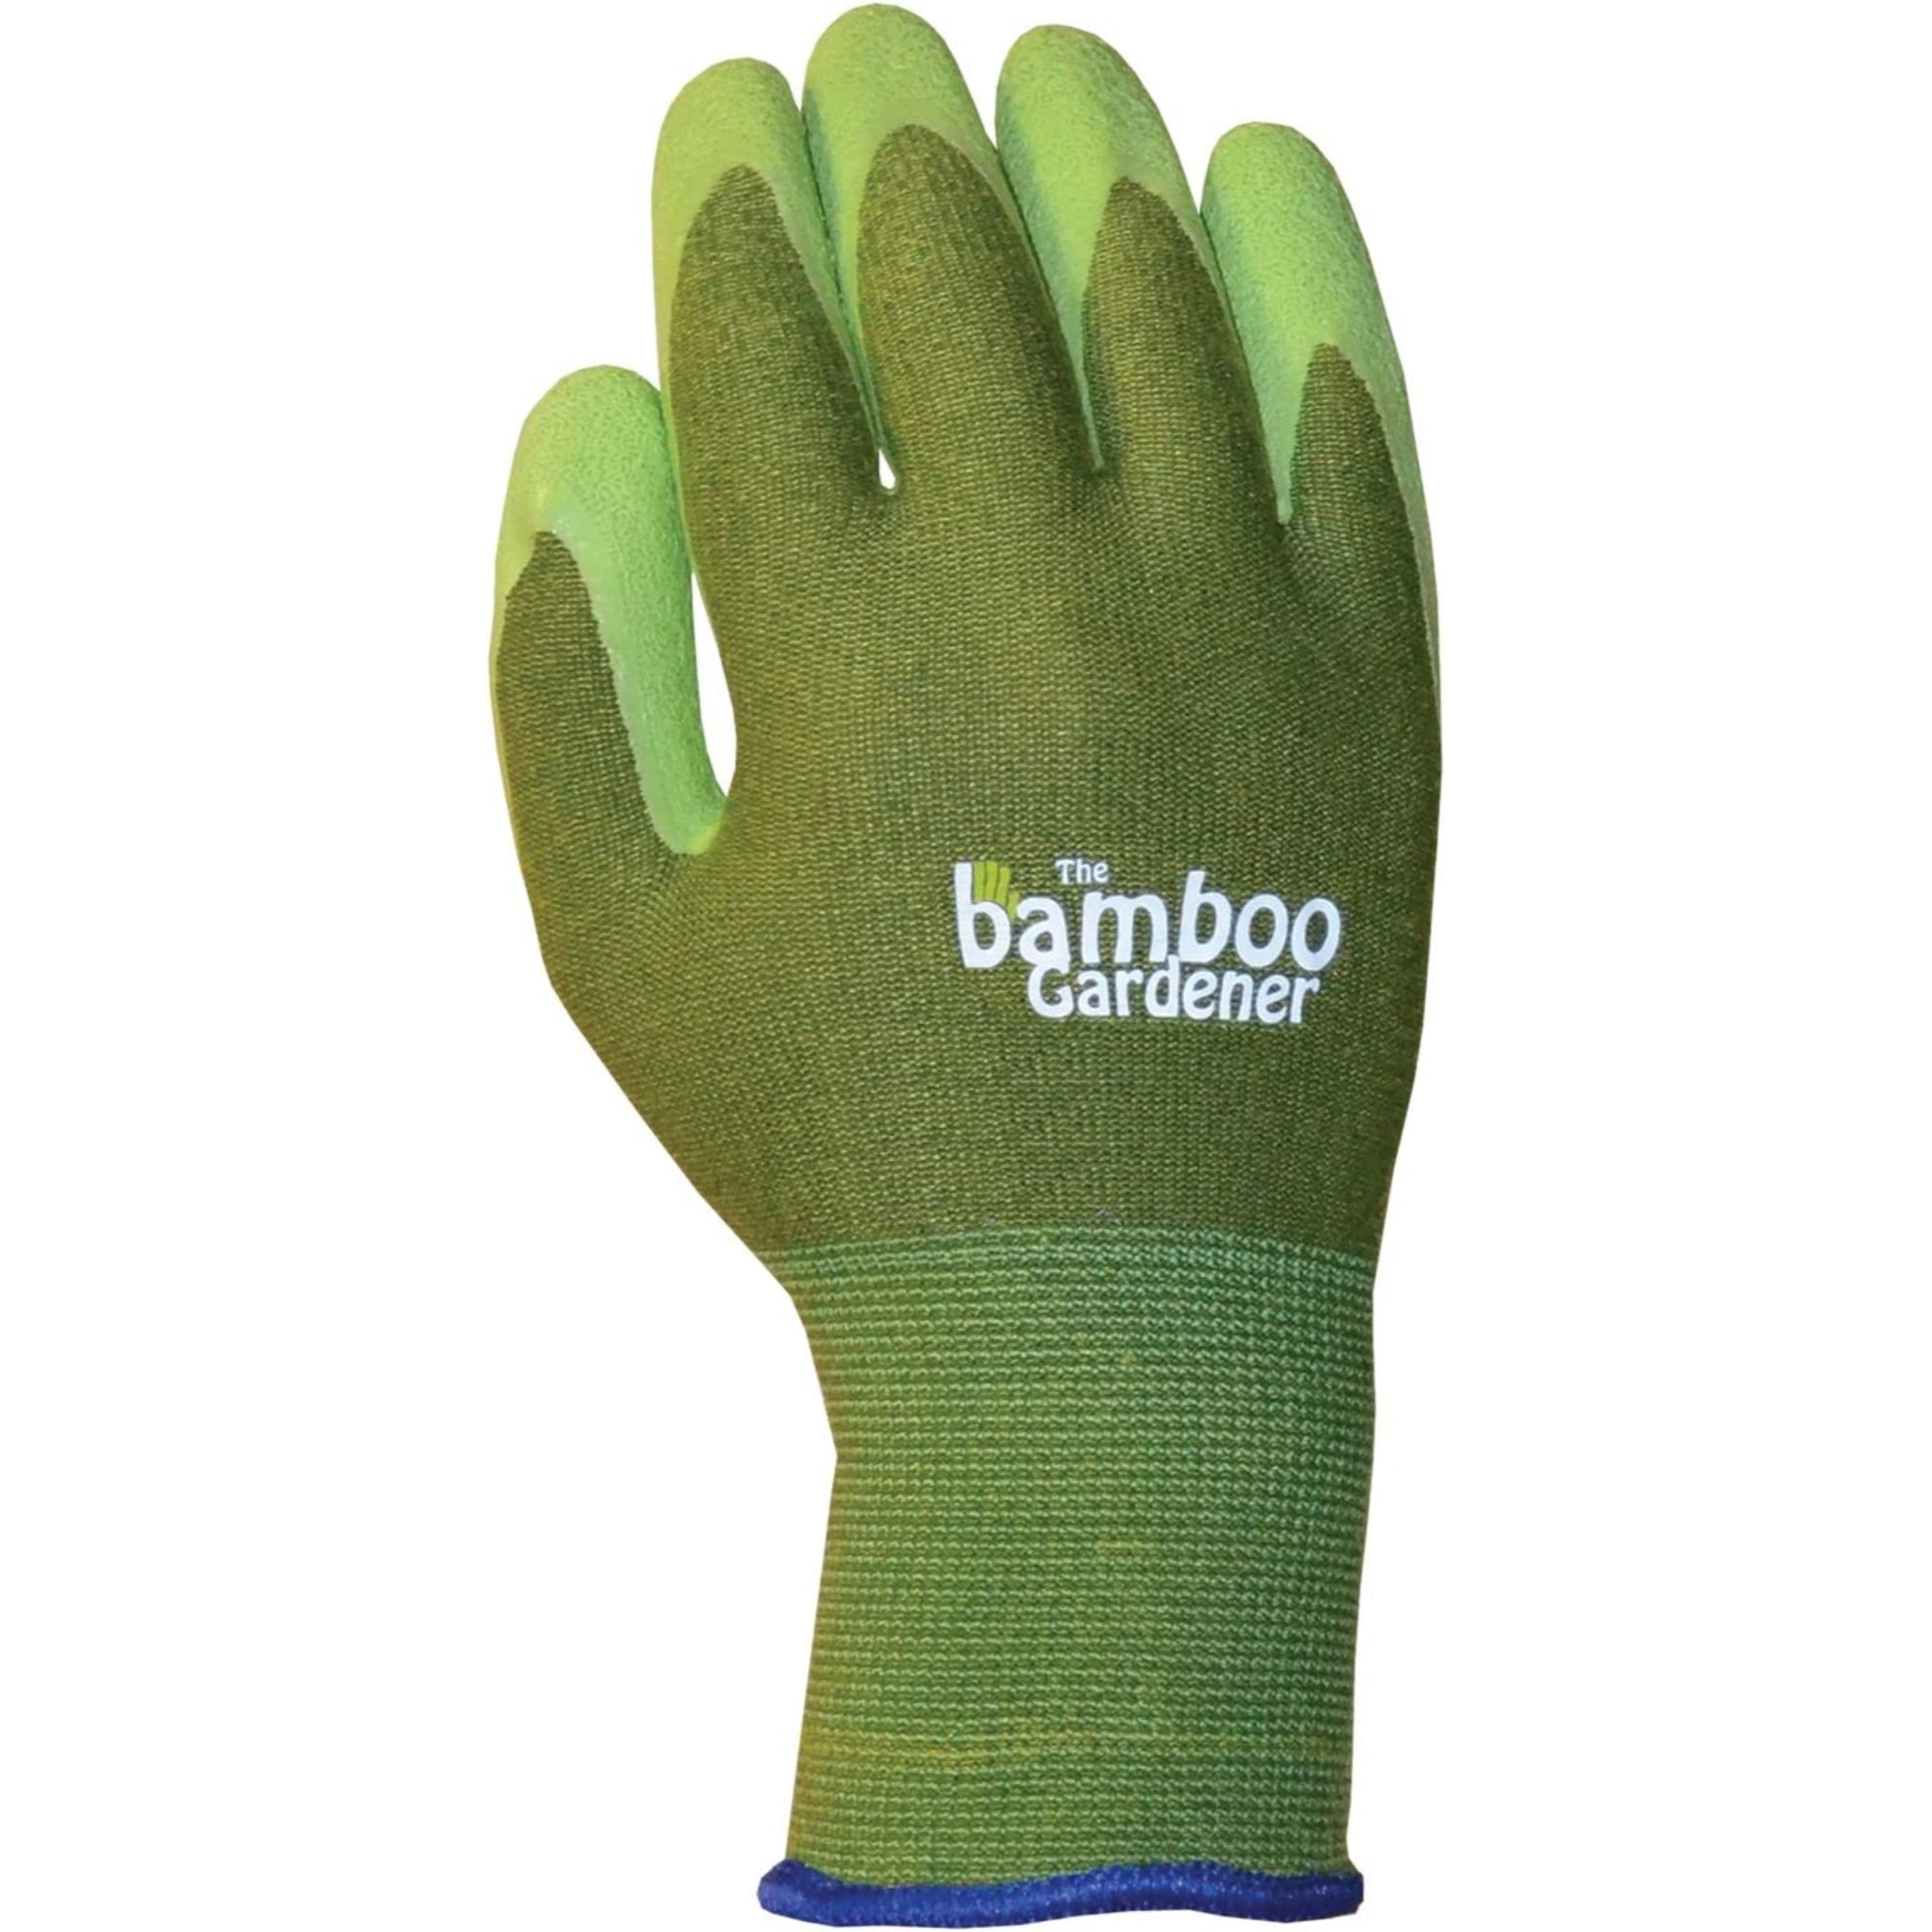 Bellingham by Radians Bamboo Gardener Rubber Palm Glove, Green